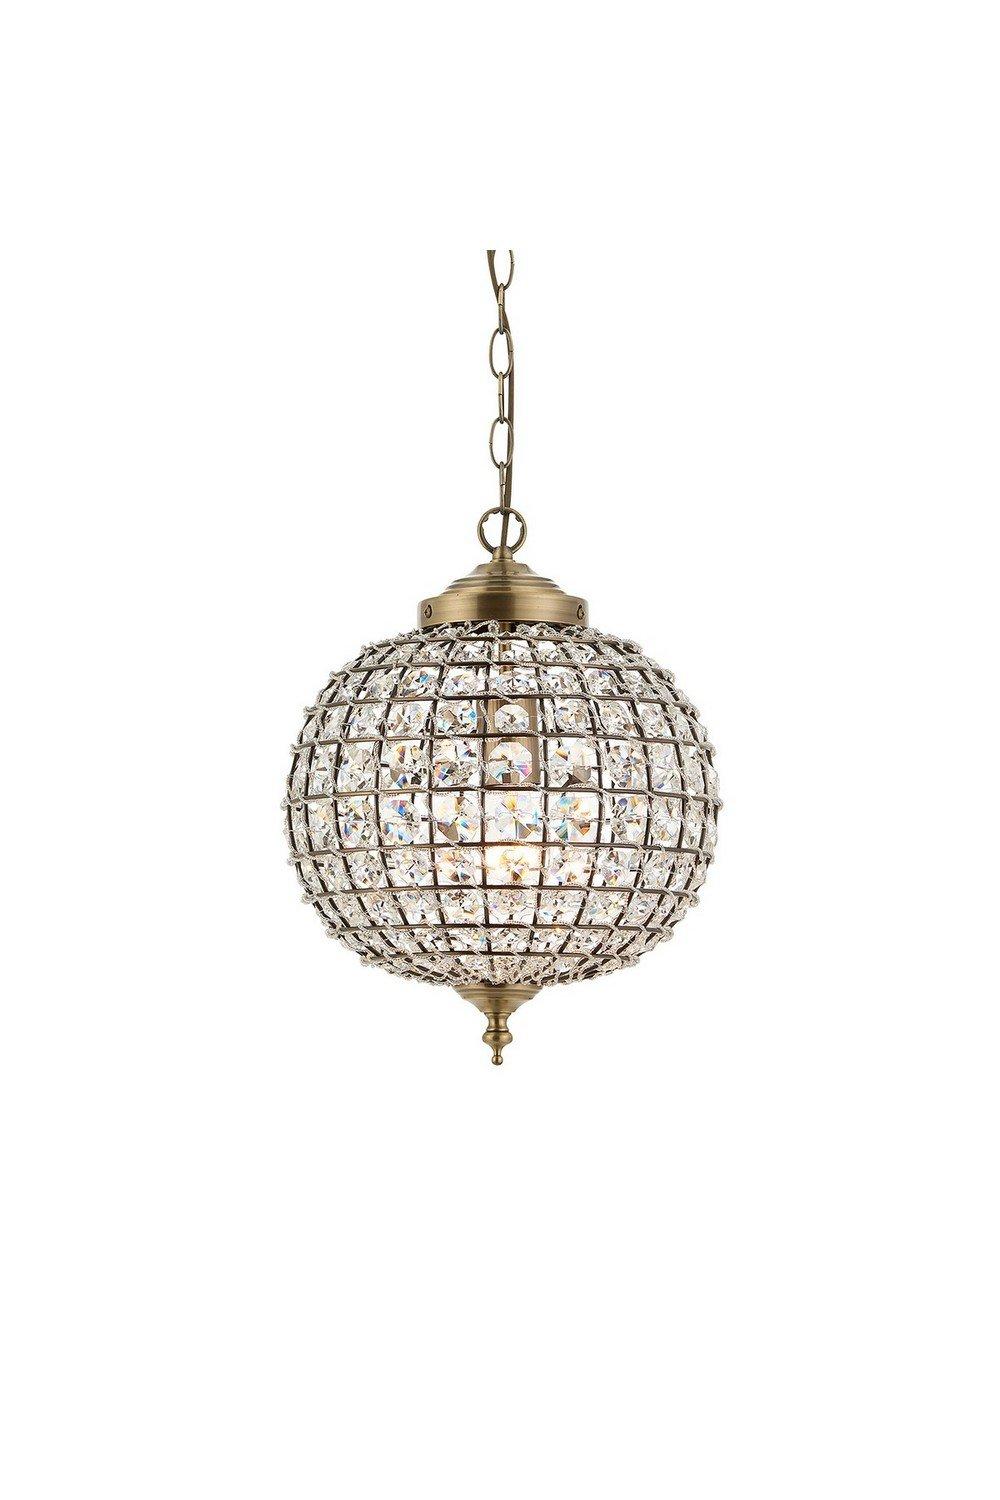 Tanaro 1 Light Ceiling Globe Pendant Antique Brass Glass E27